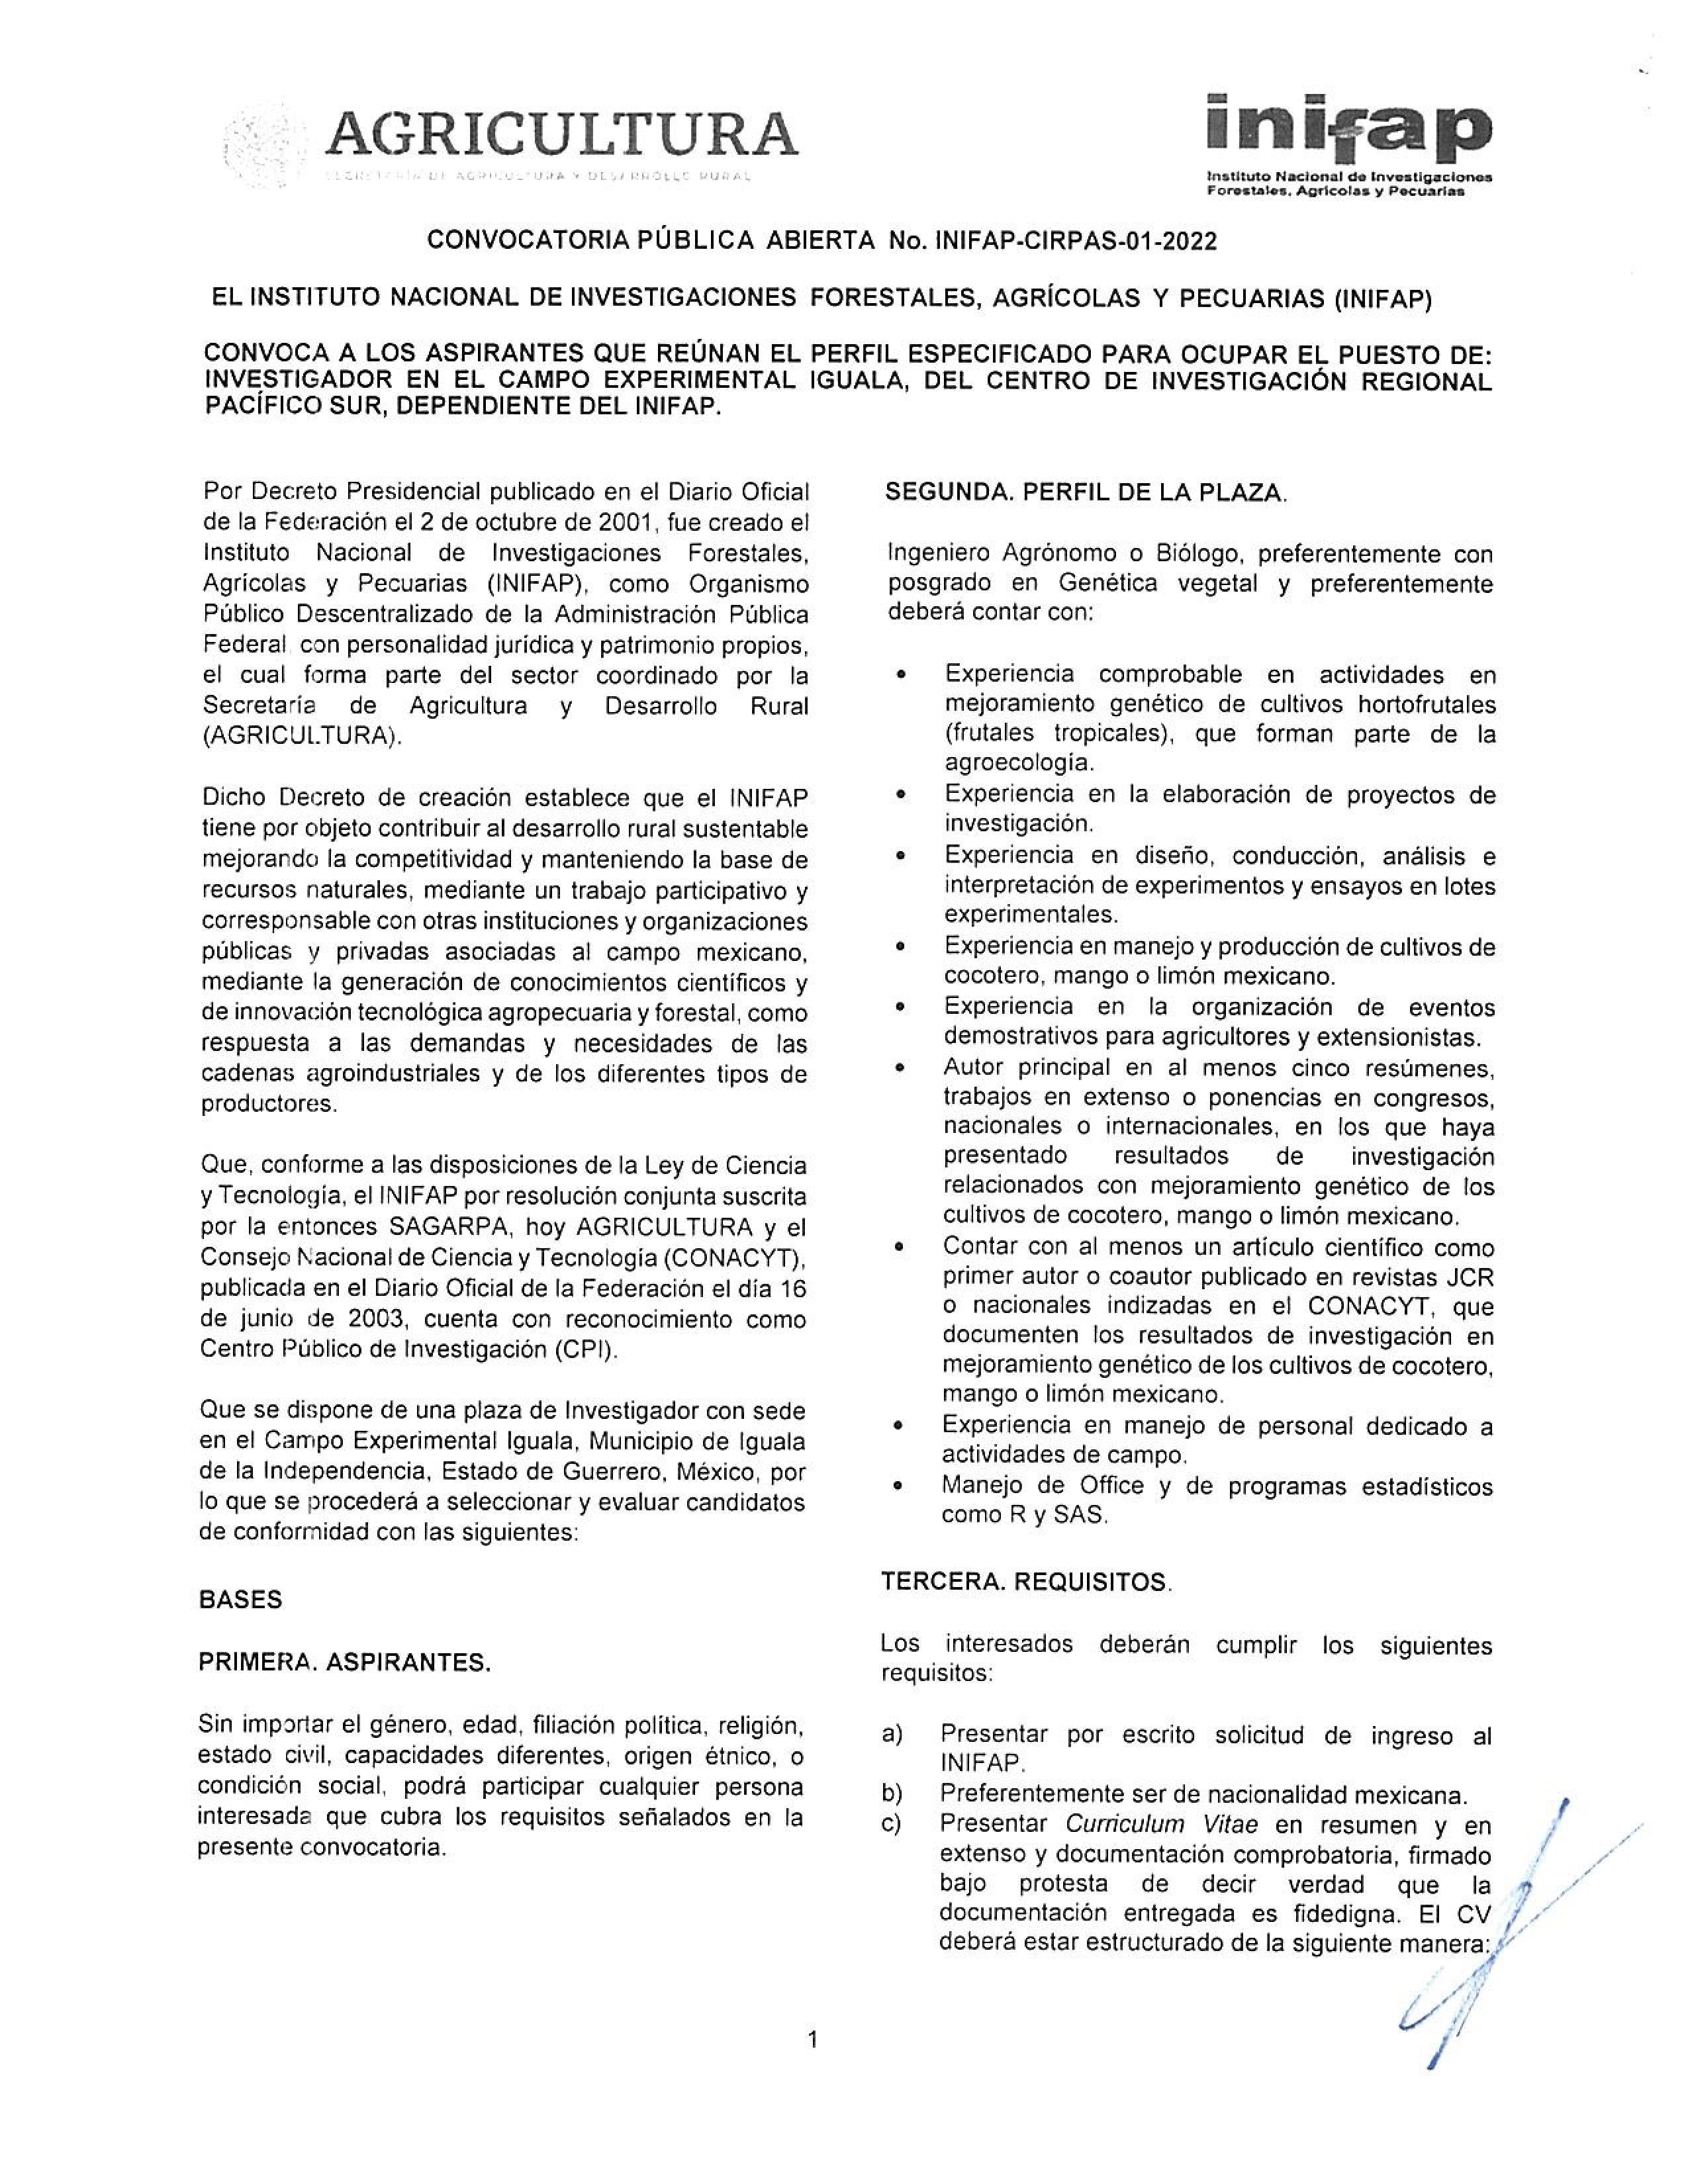 CONVOCATORIA PUBLICA ABIERTA NO. INIFAP-CIRPAS-01-2022 PAG.1